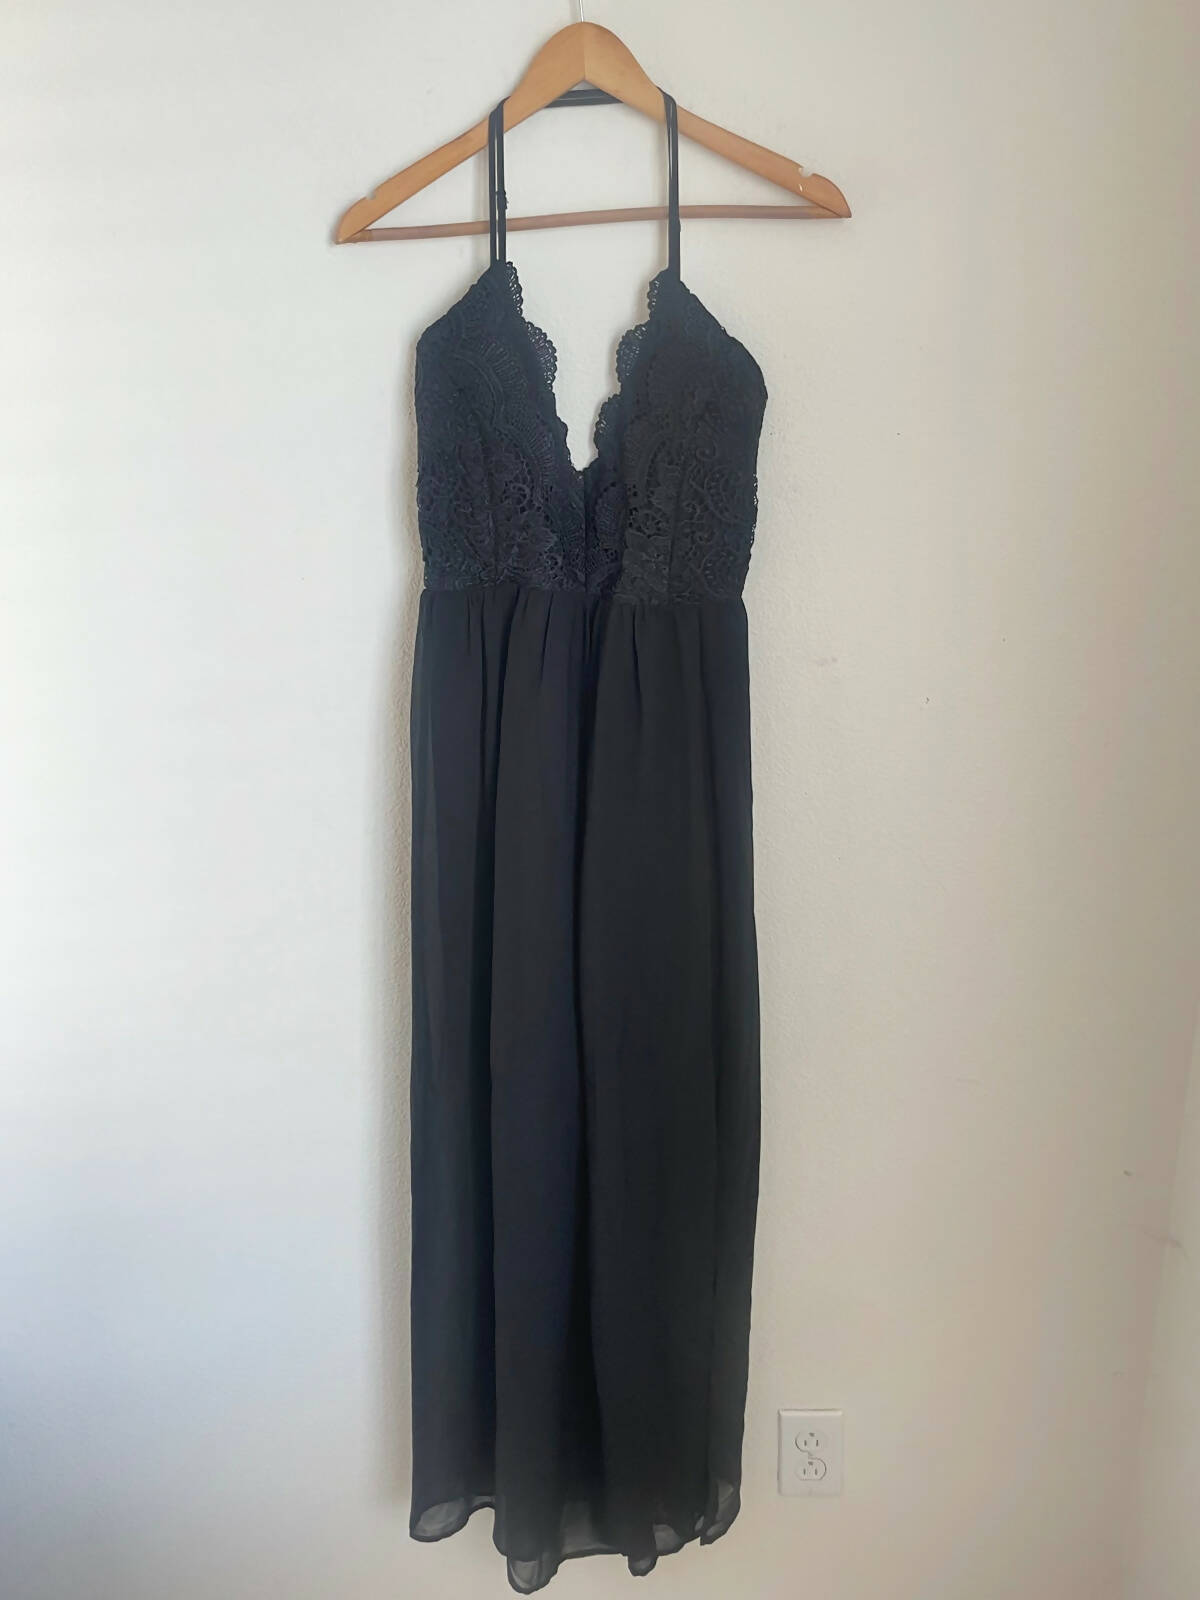 Lace front flowy black dress